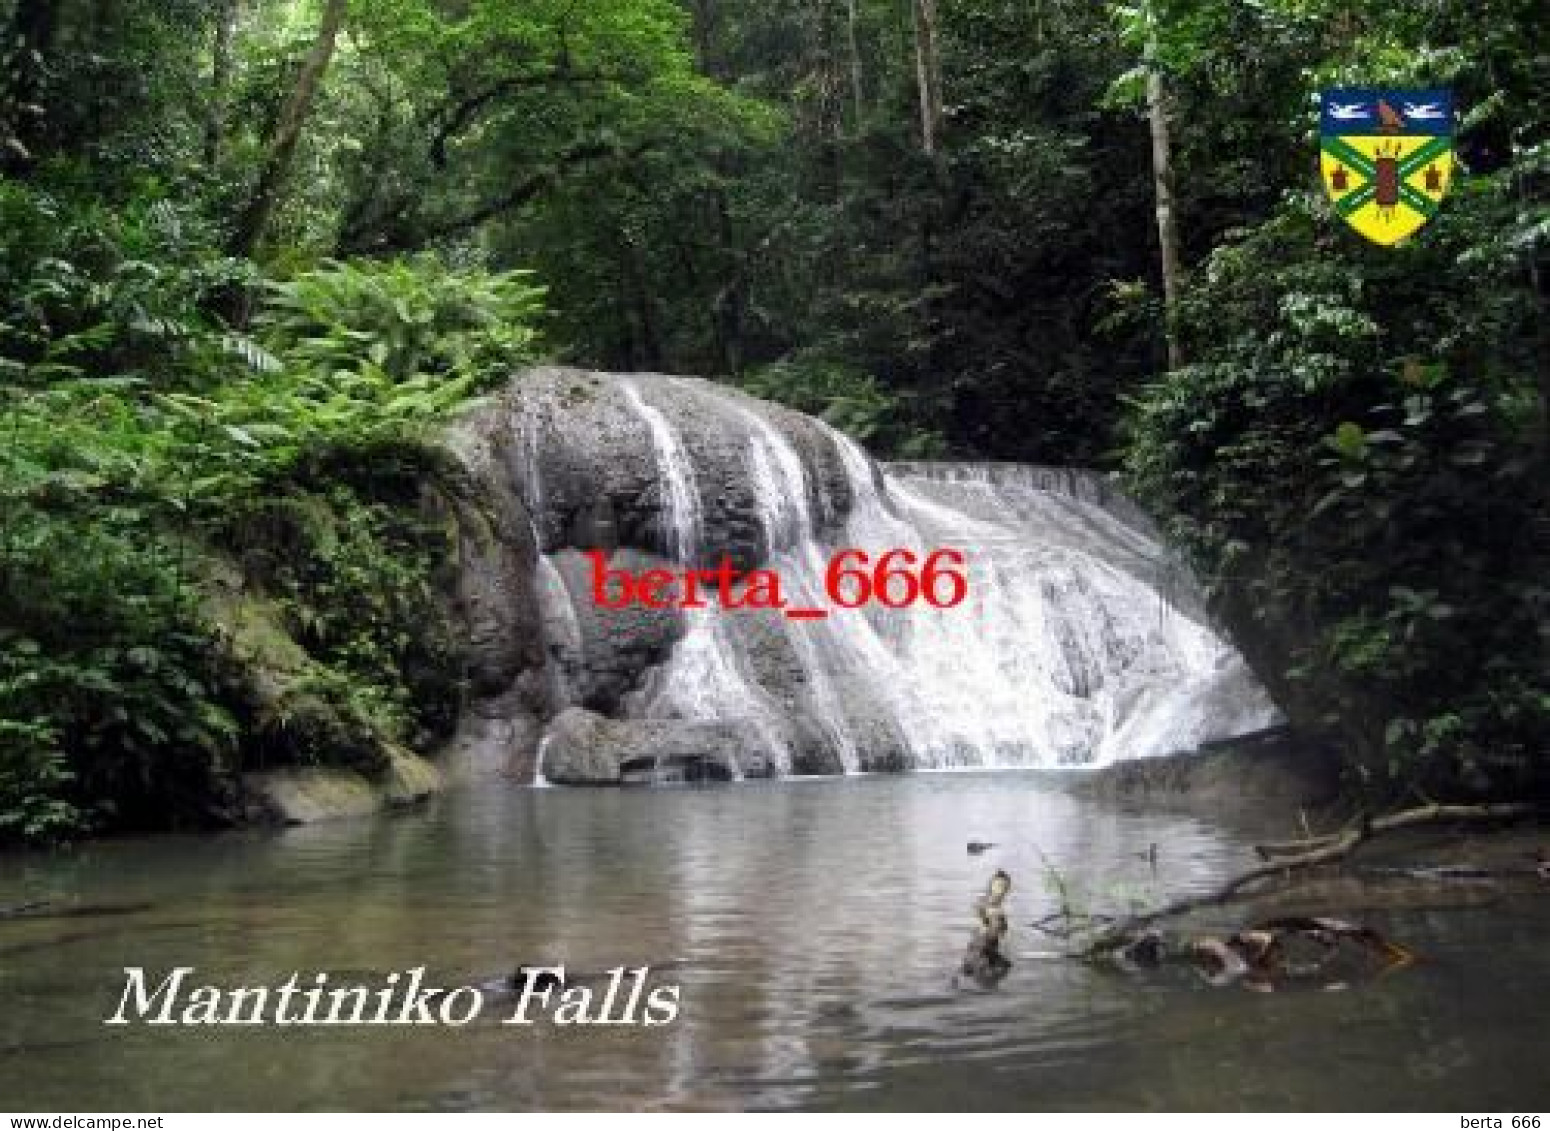 Solomon Islands Mantiniko Falls New Postcard - Solomon Islands